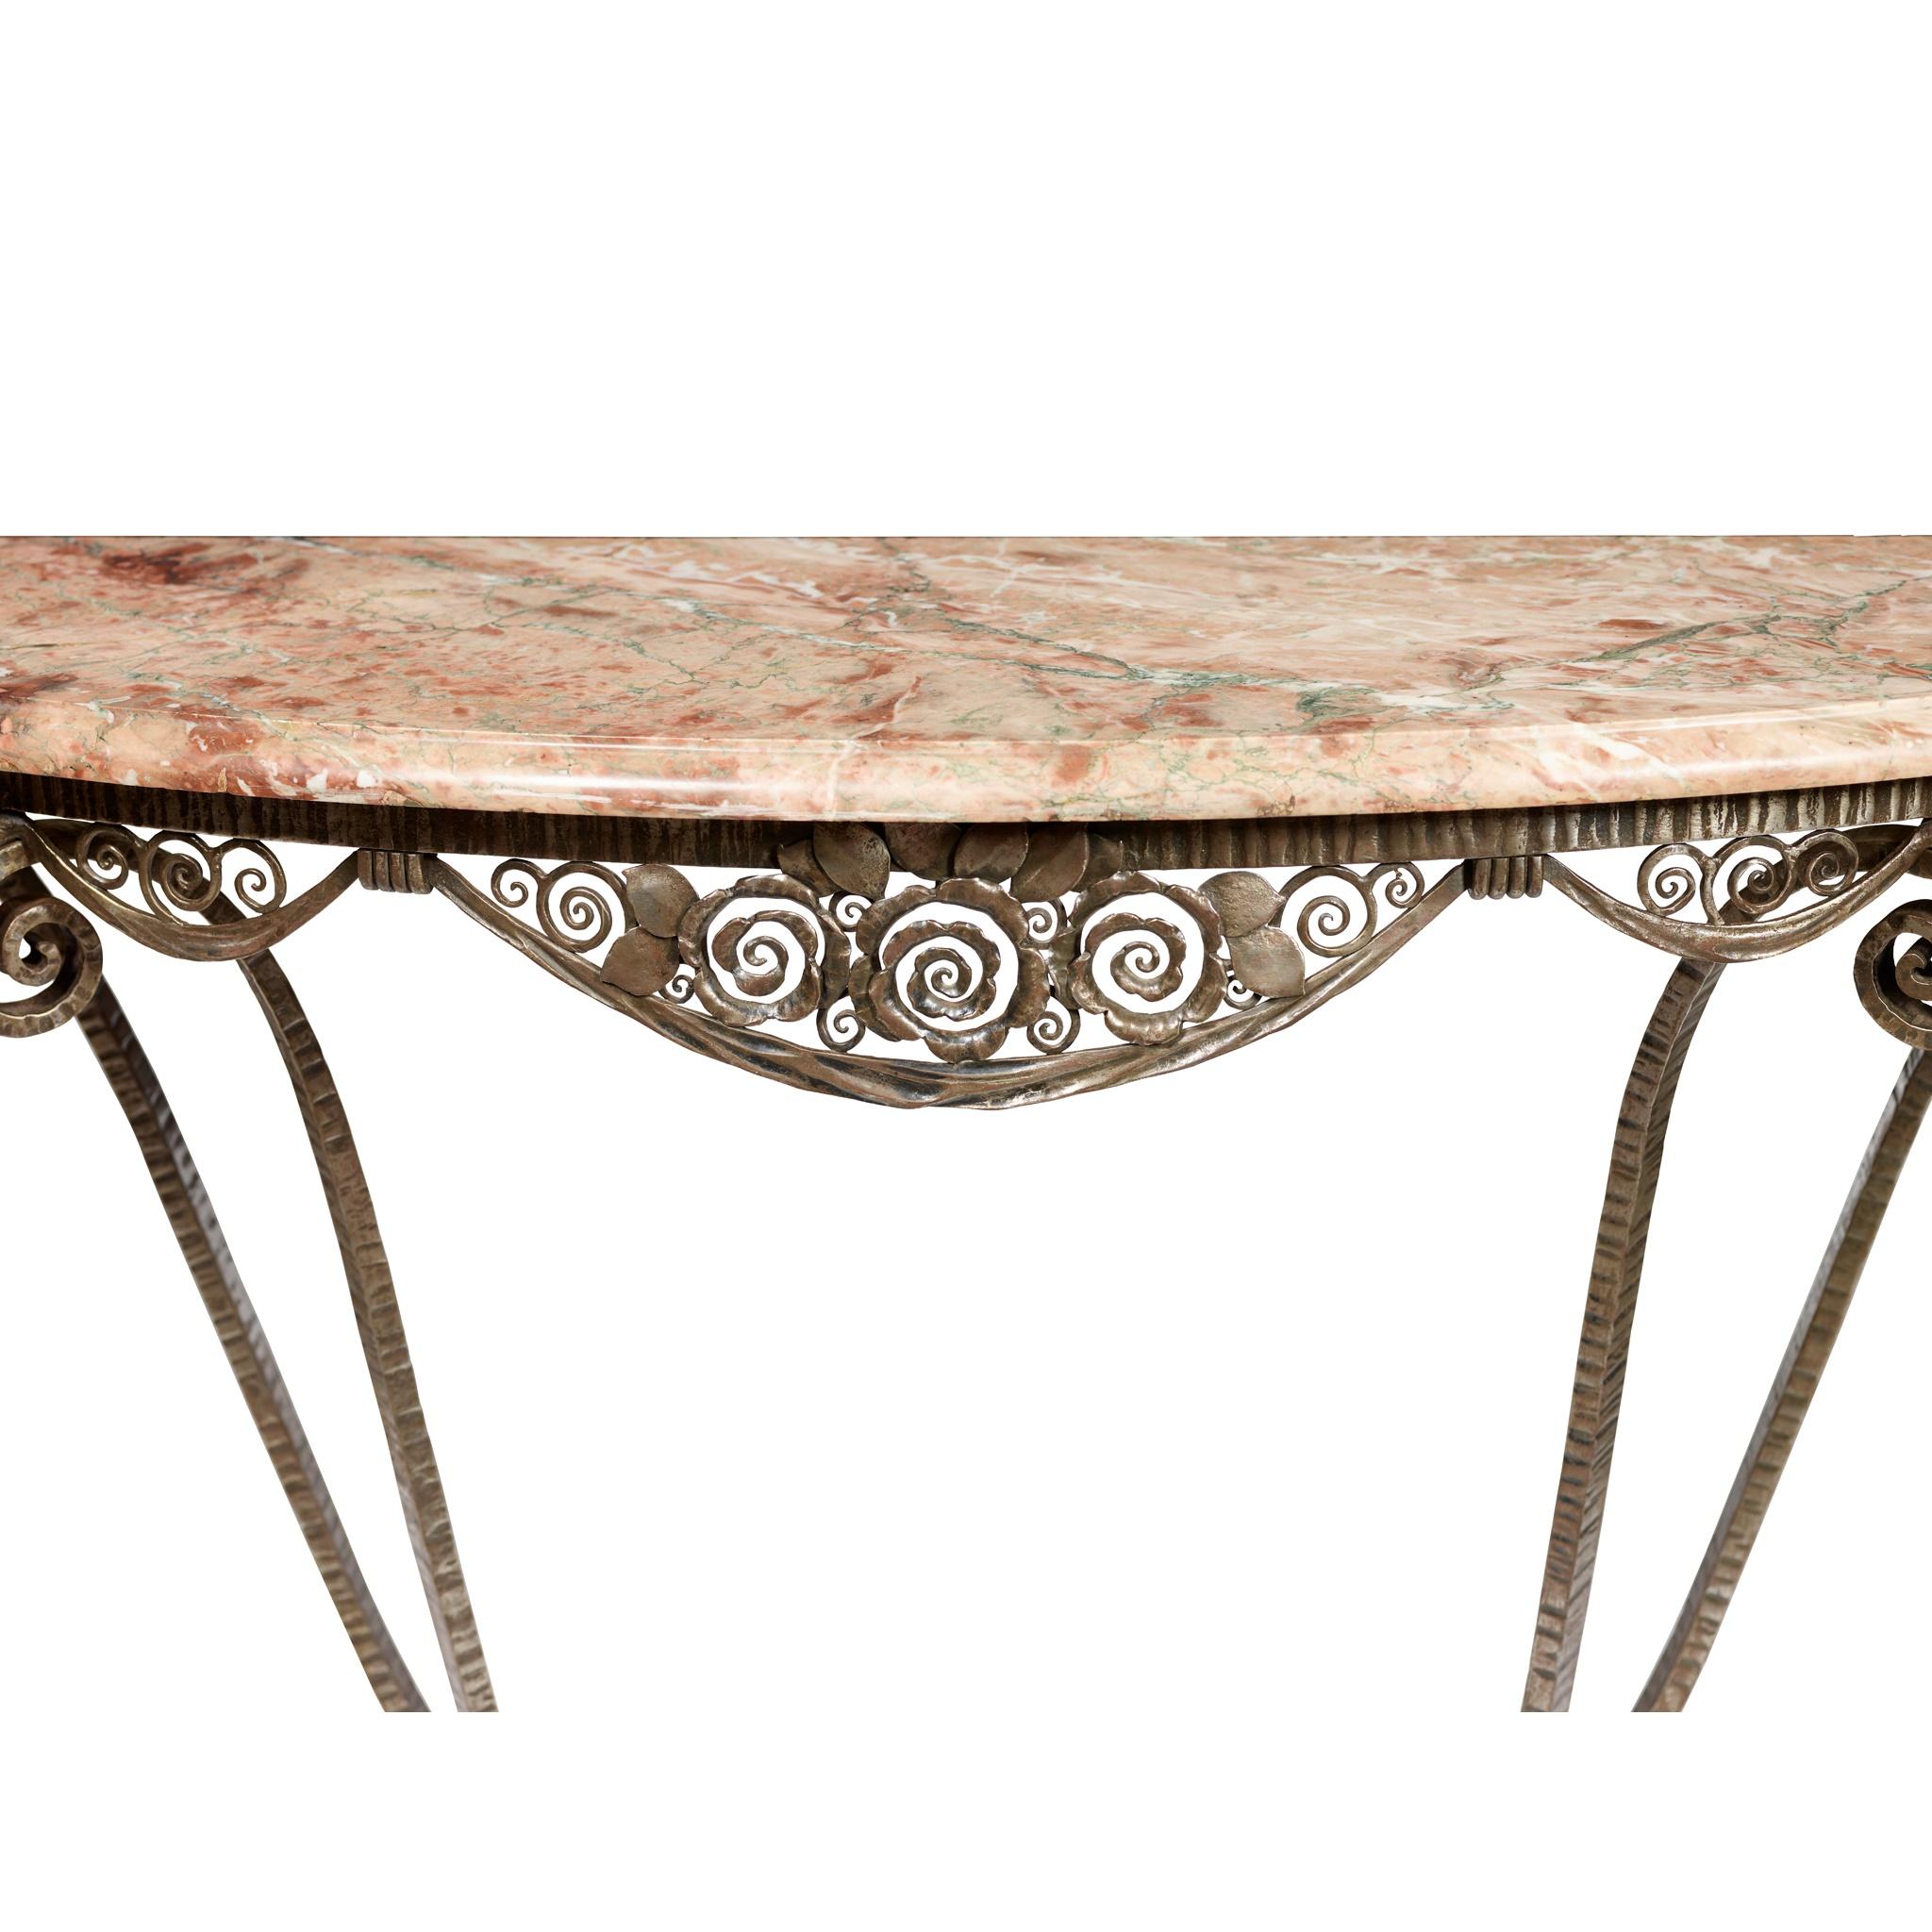 Edgar Brandt (1880-1960)
'Simplicité' console table, circa 1925
Wrought steel, marble
Measures: 150.5cm wide, 87.5cm high, 45.5cm deep.